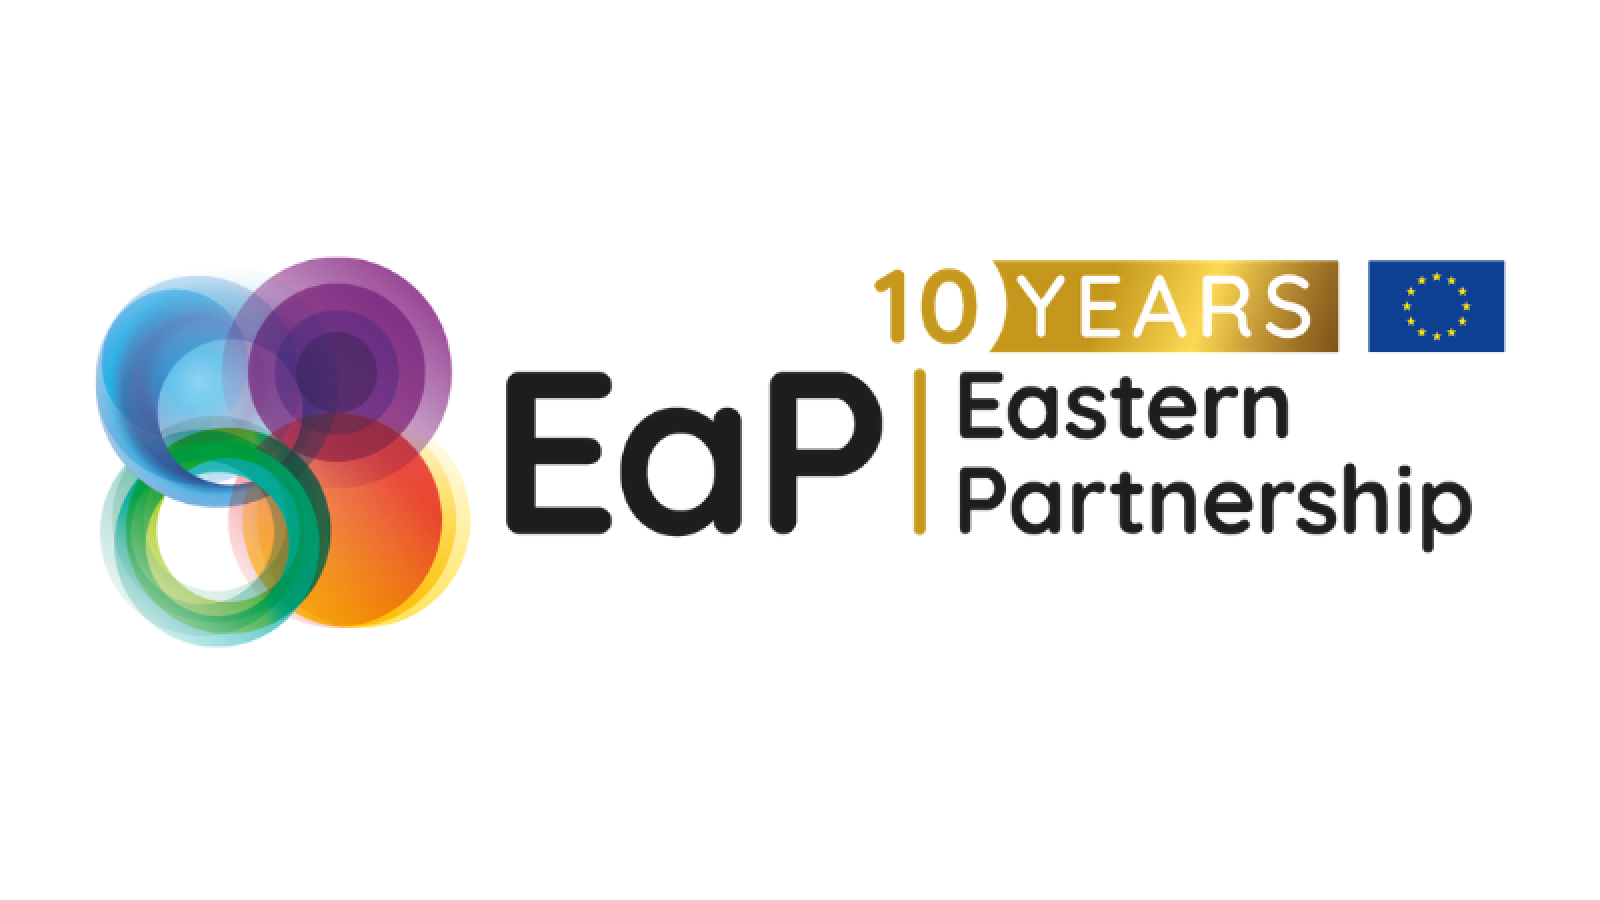 Celebrating 10 years of the Eastern Partnership